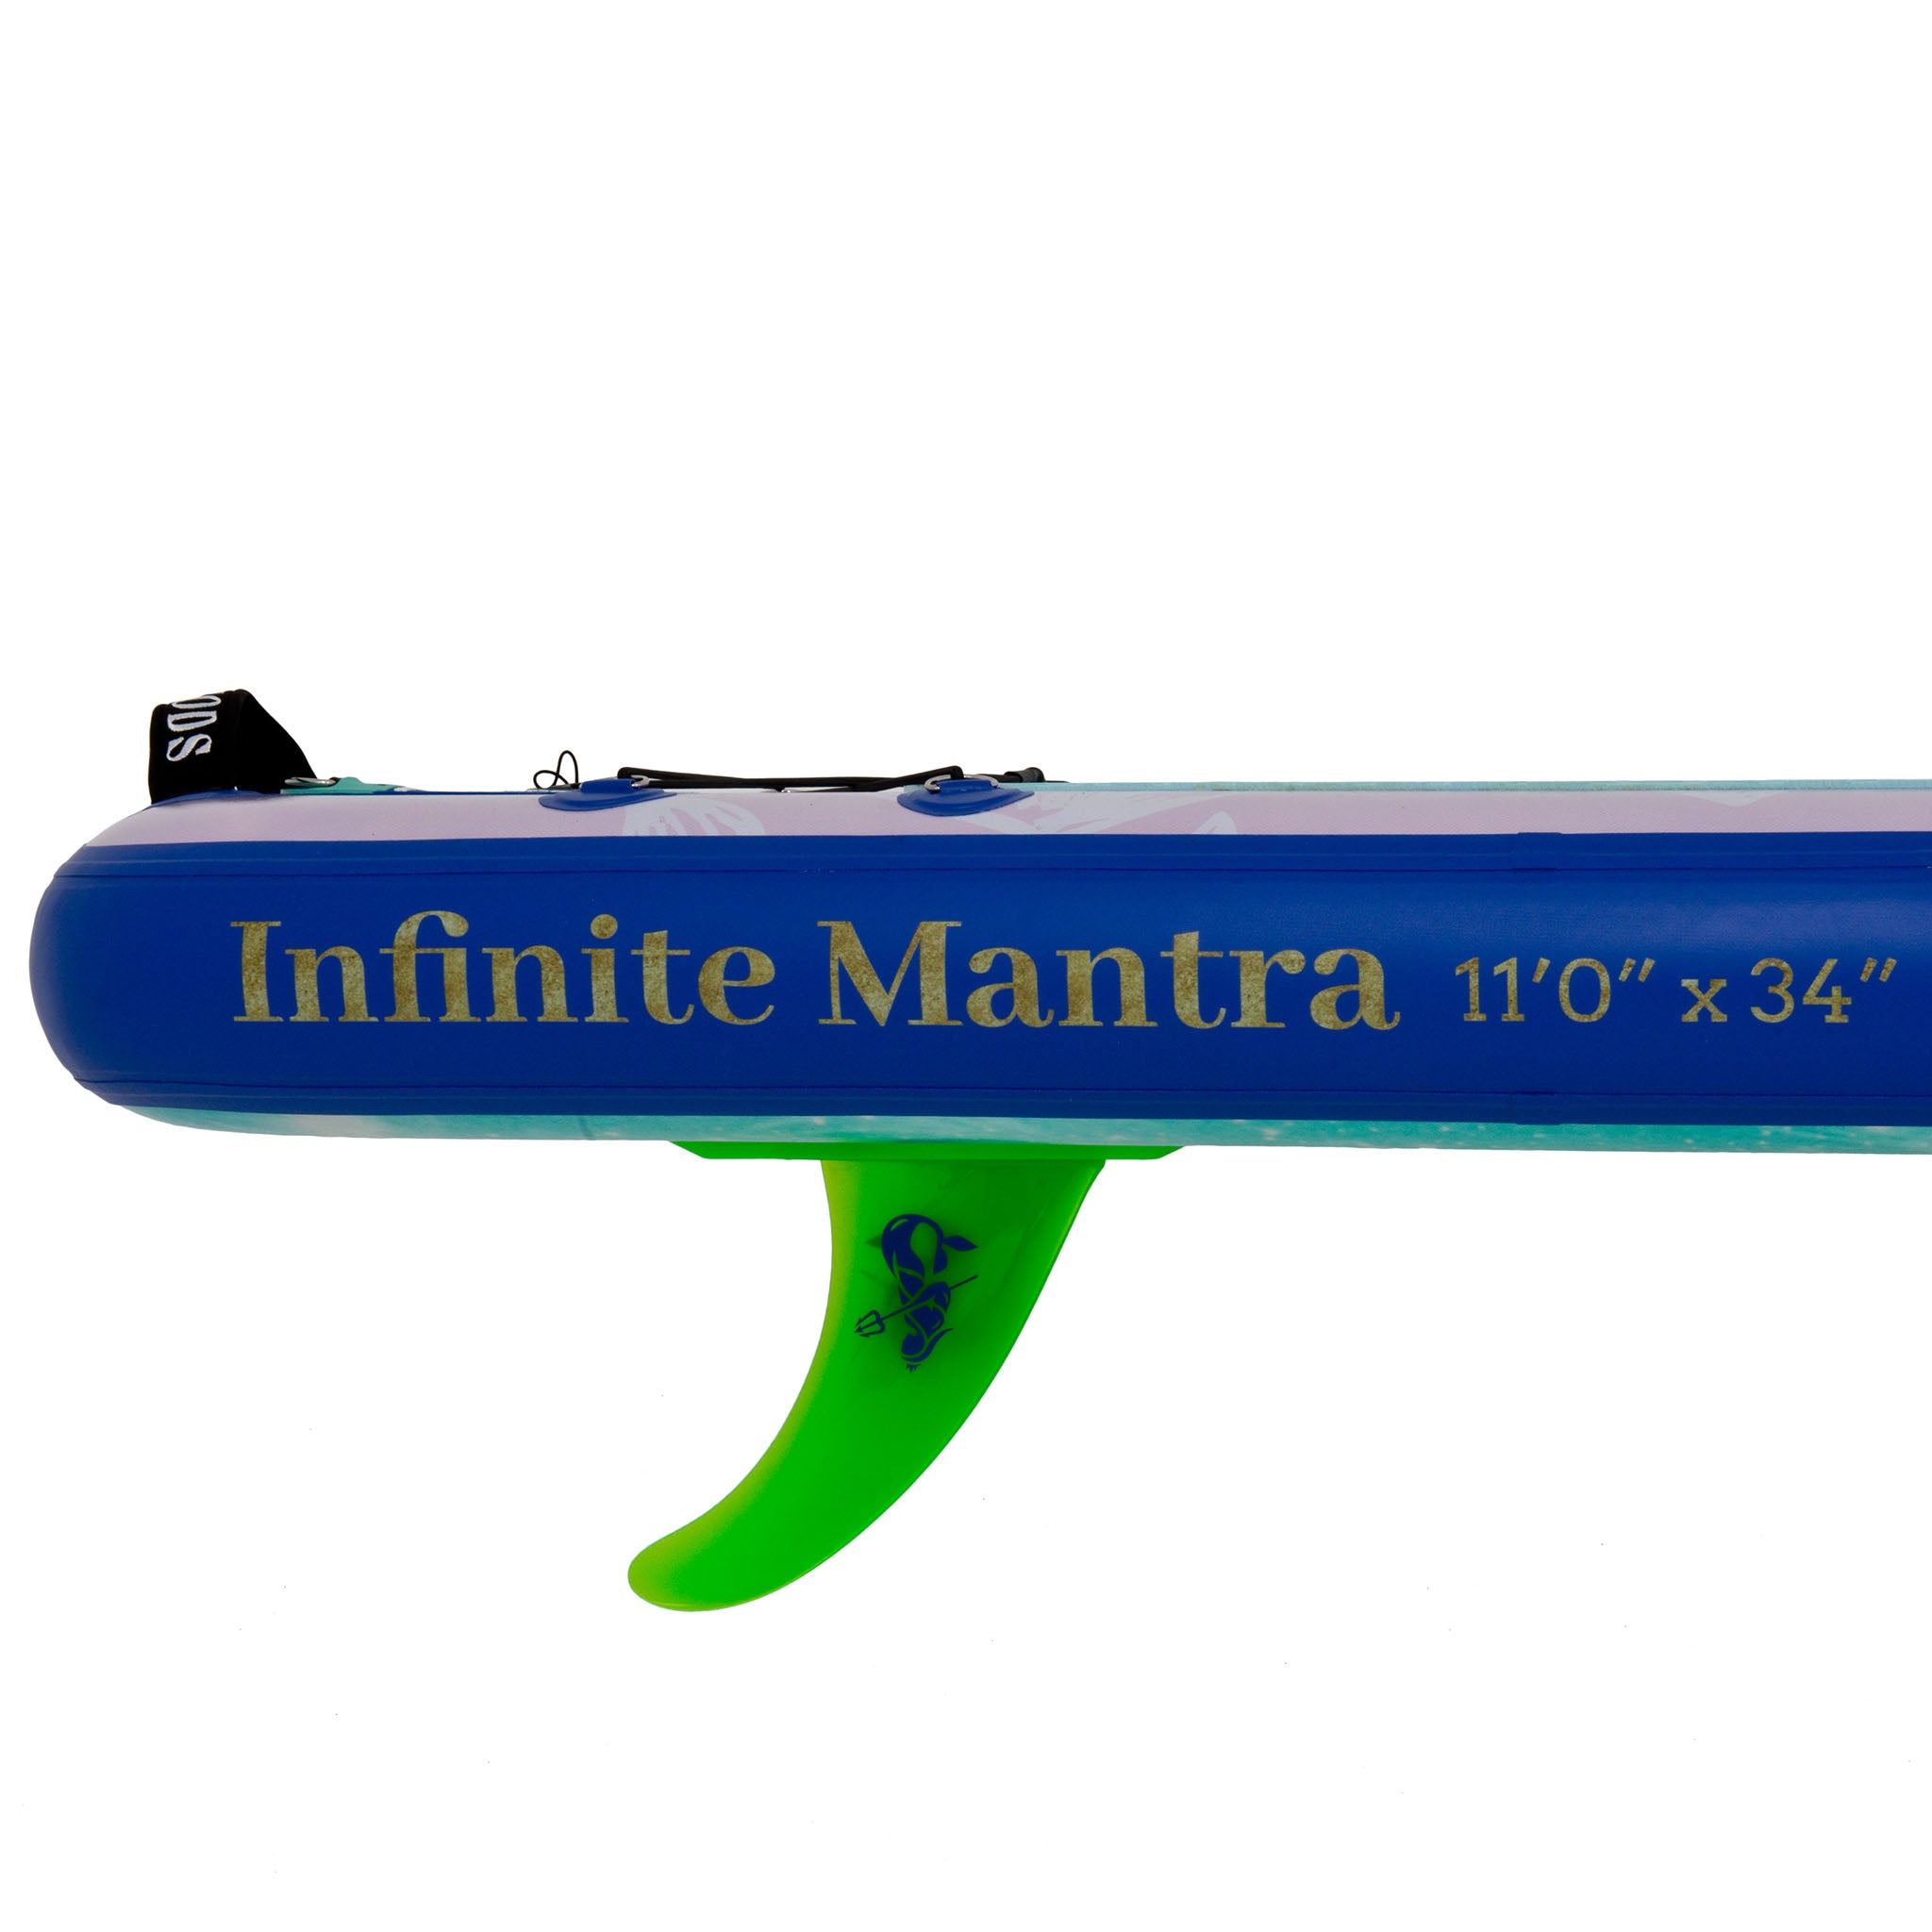 Infinite Mantra Fin View